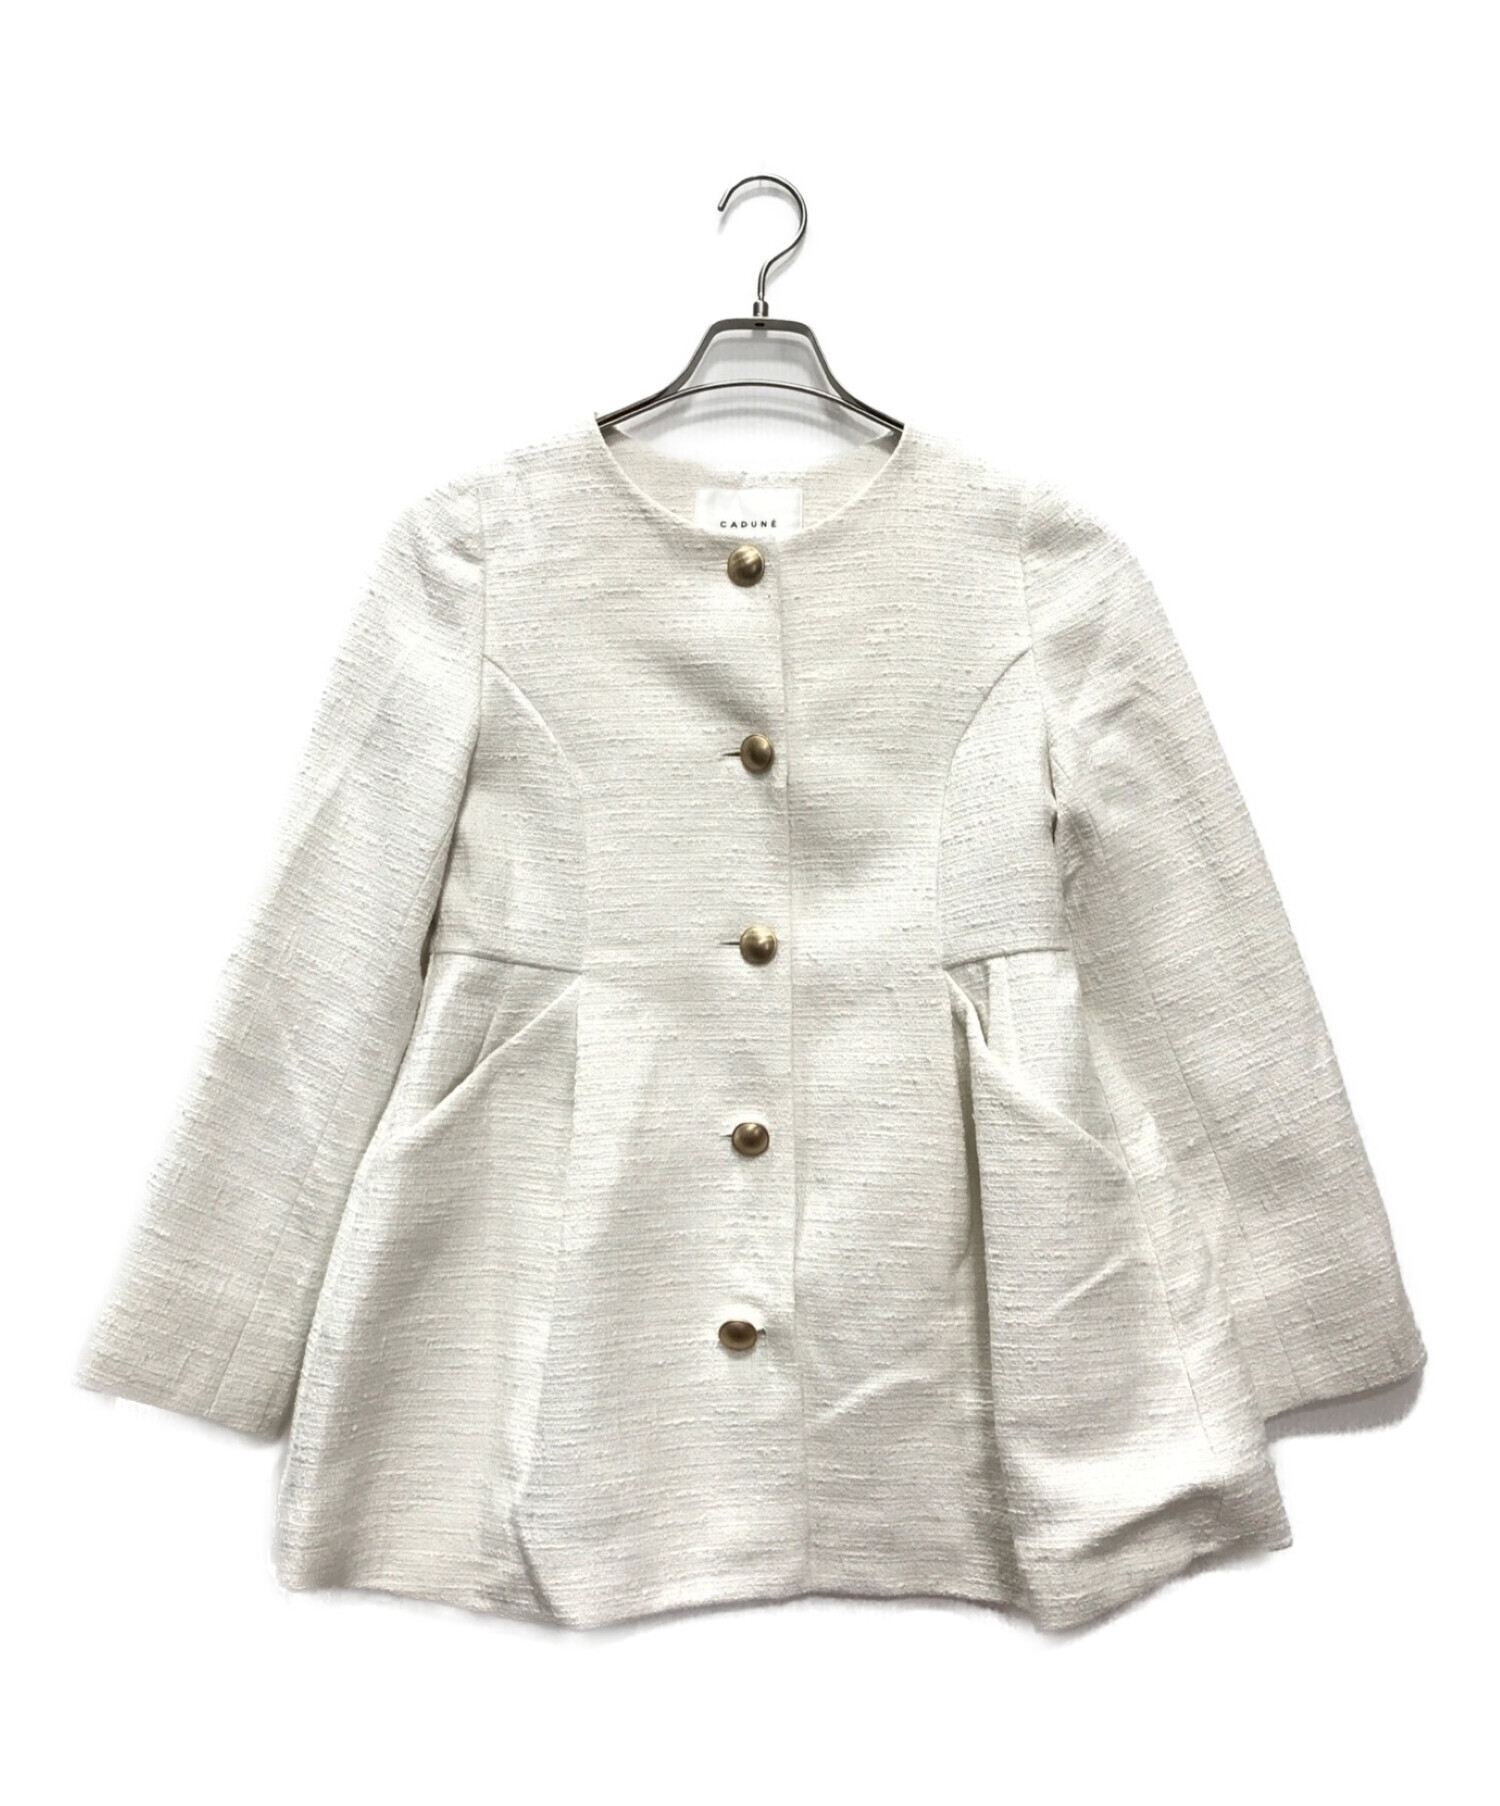 CADUNE (カデュネ) ペプラムジャケット ホワイト サイズ:36 未使用品